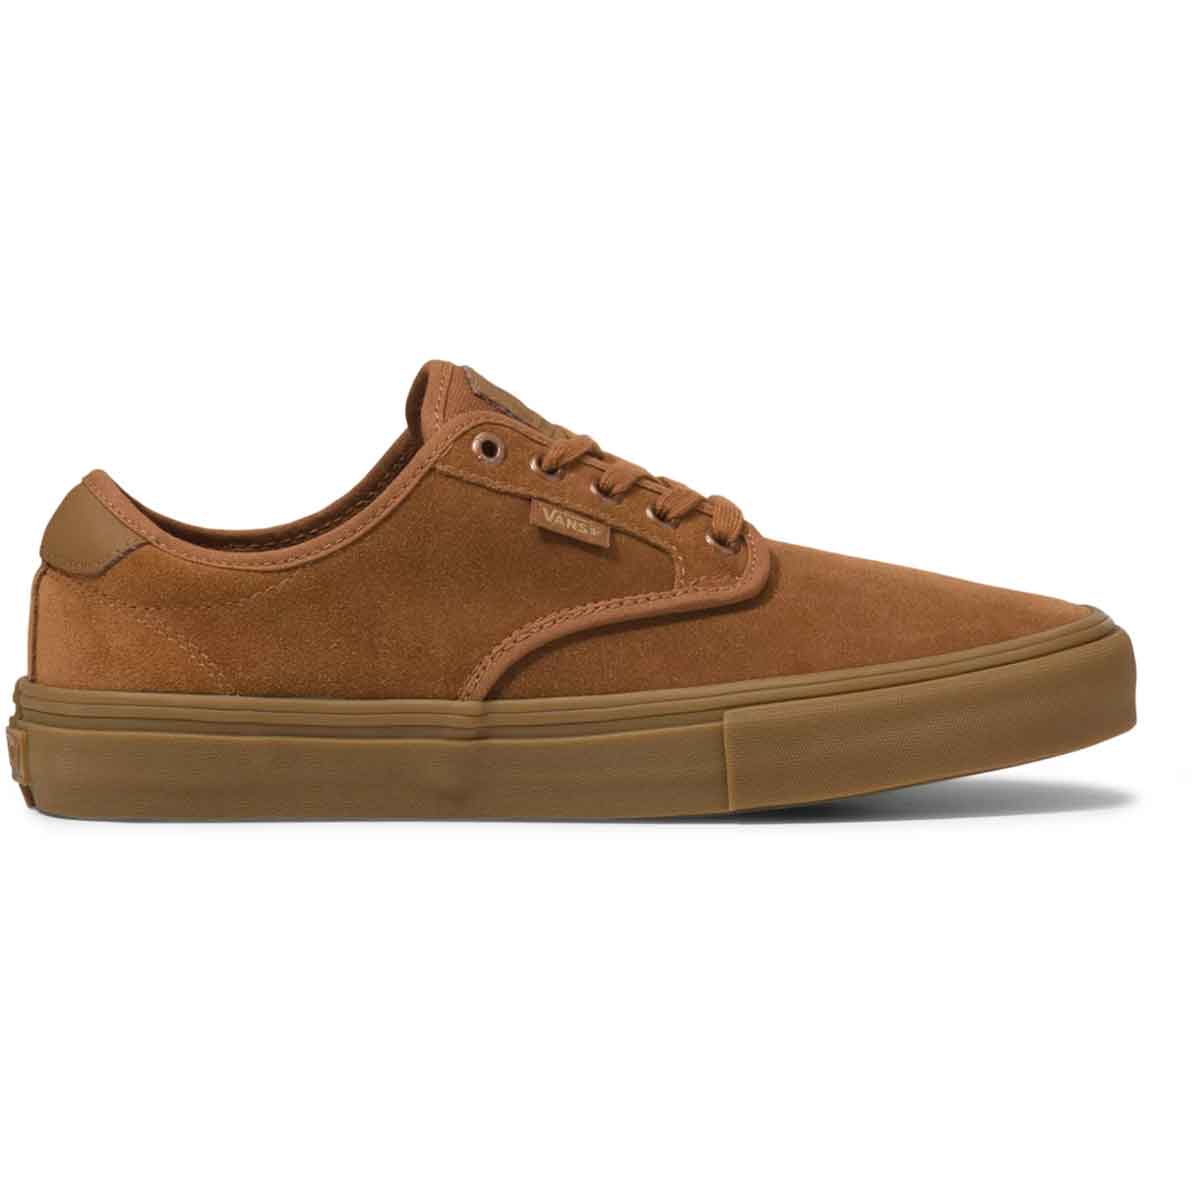 Vans Skate Chima Pro Shoes - Brown/Gum 